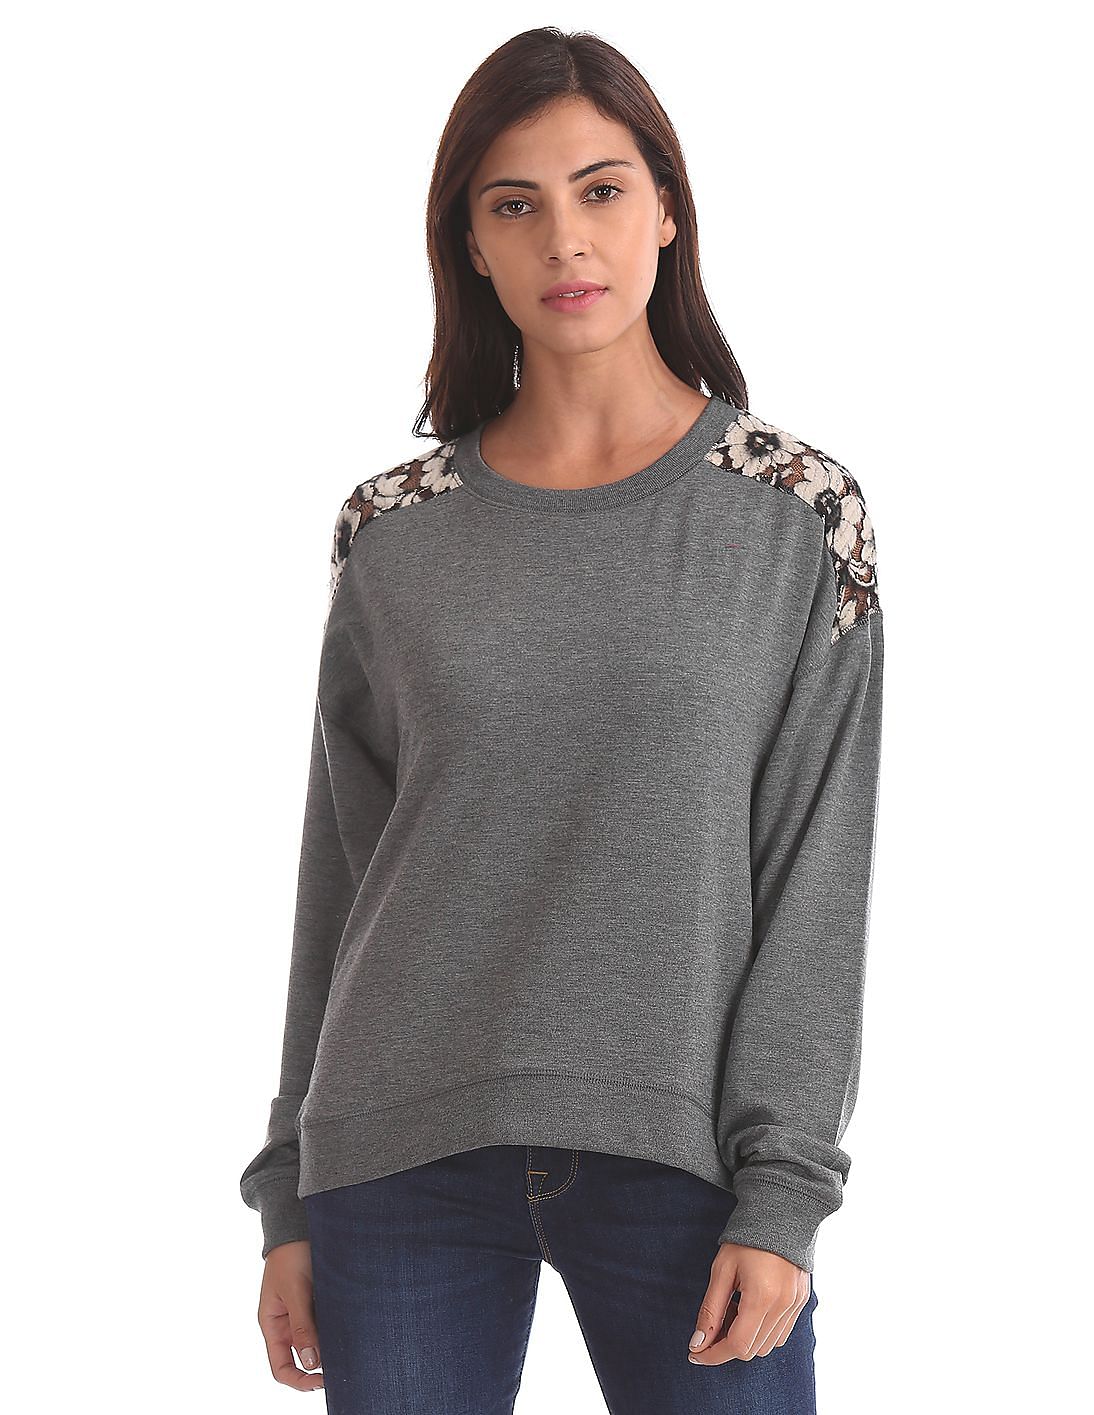 Buy Aeropostale Regular Fit Lace Sweatshirt - NNNOW.com